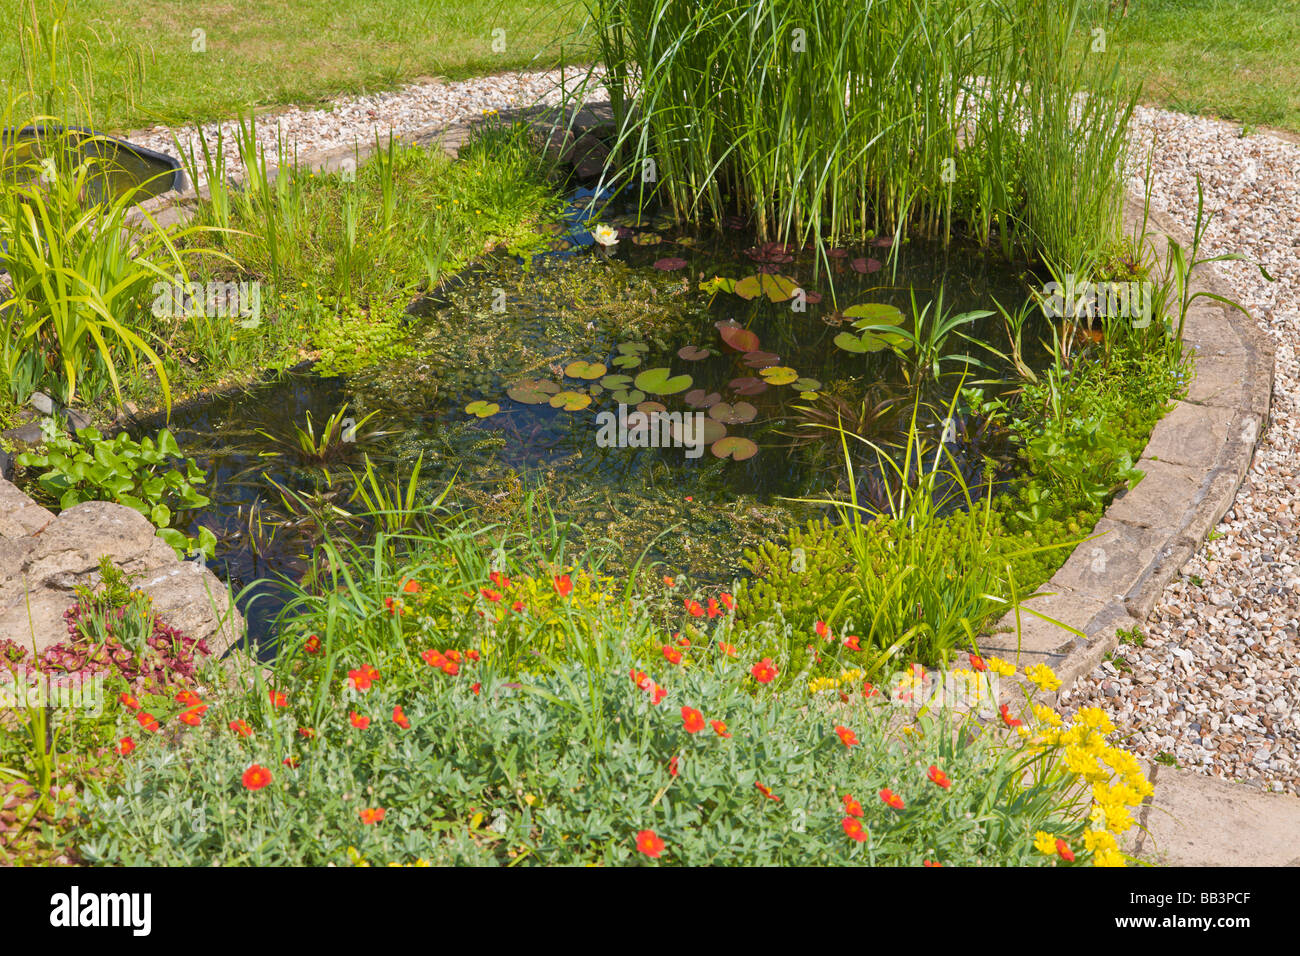 Garden pond and aquatic plants Stock Photo